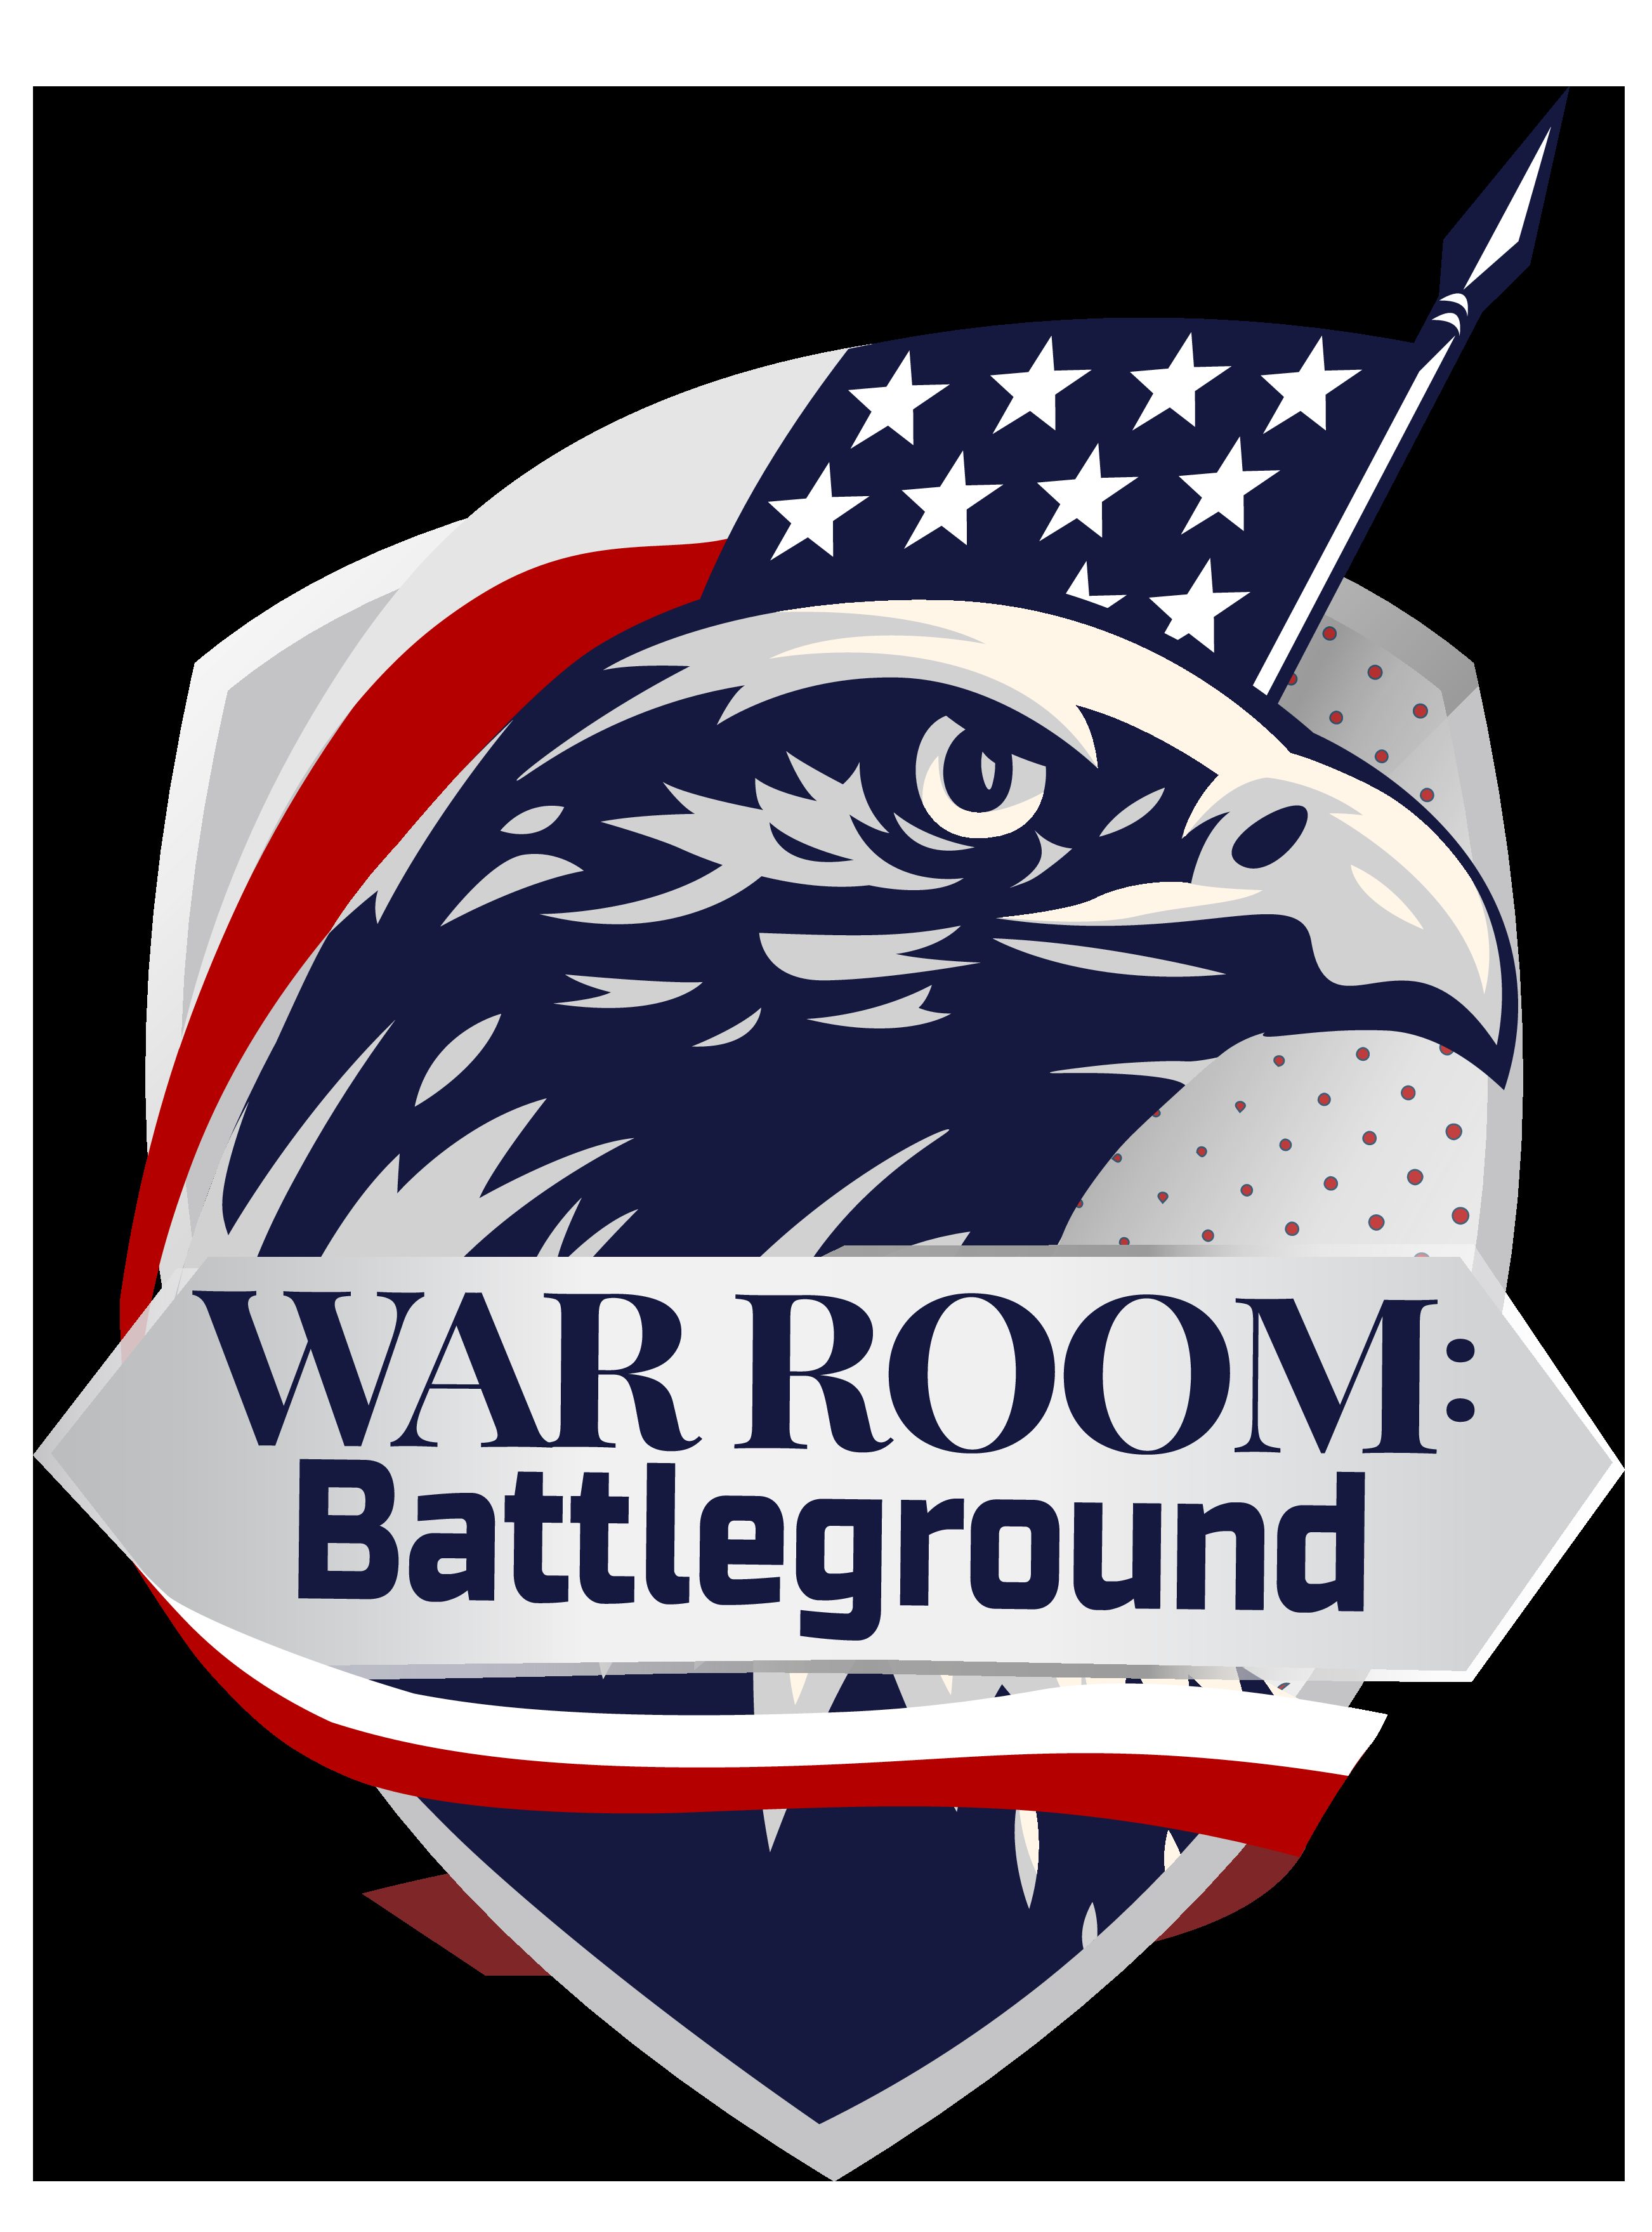 WarRoom Battleground EP 223: Newsoms Hold In California; Directed Evolution